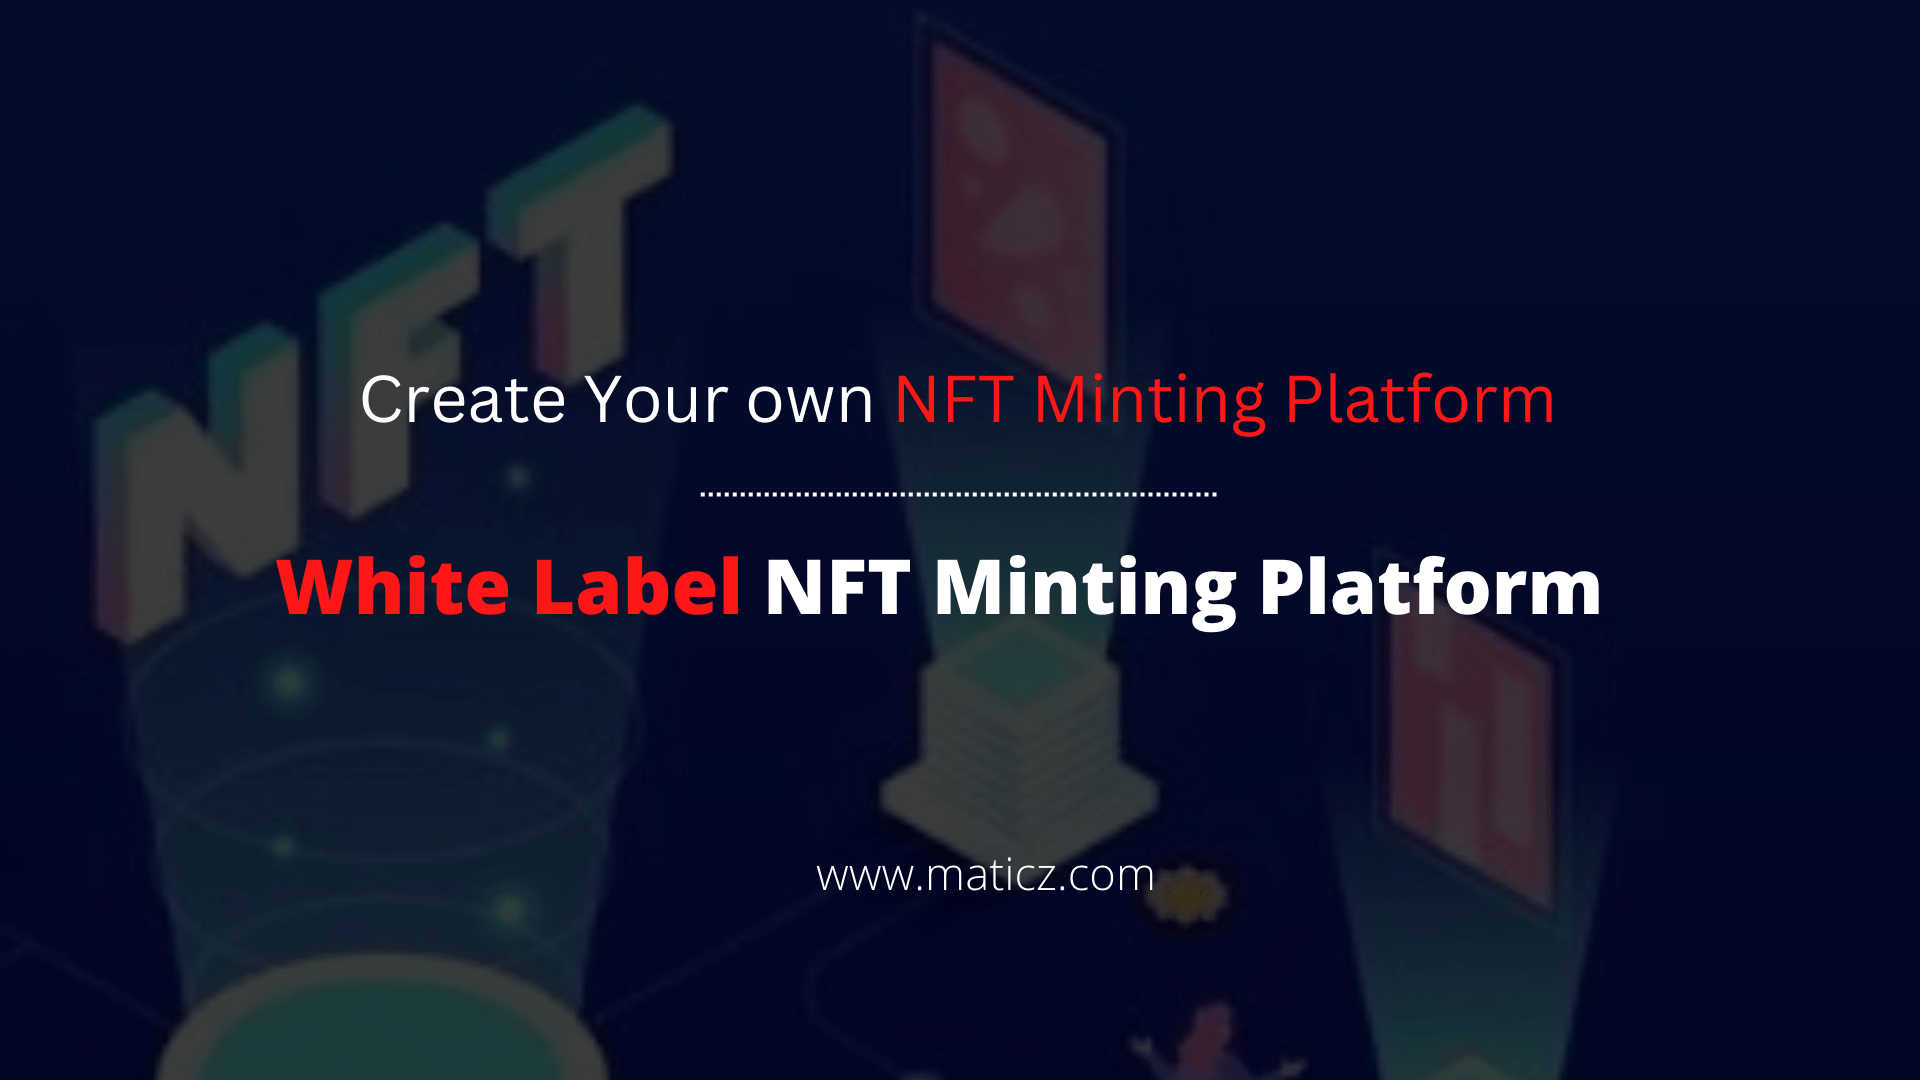 White Label NFT Minting Platform – Develop As Like The Well-Developed NFT Minting Platform